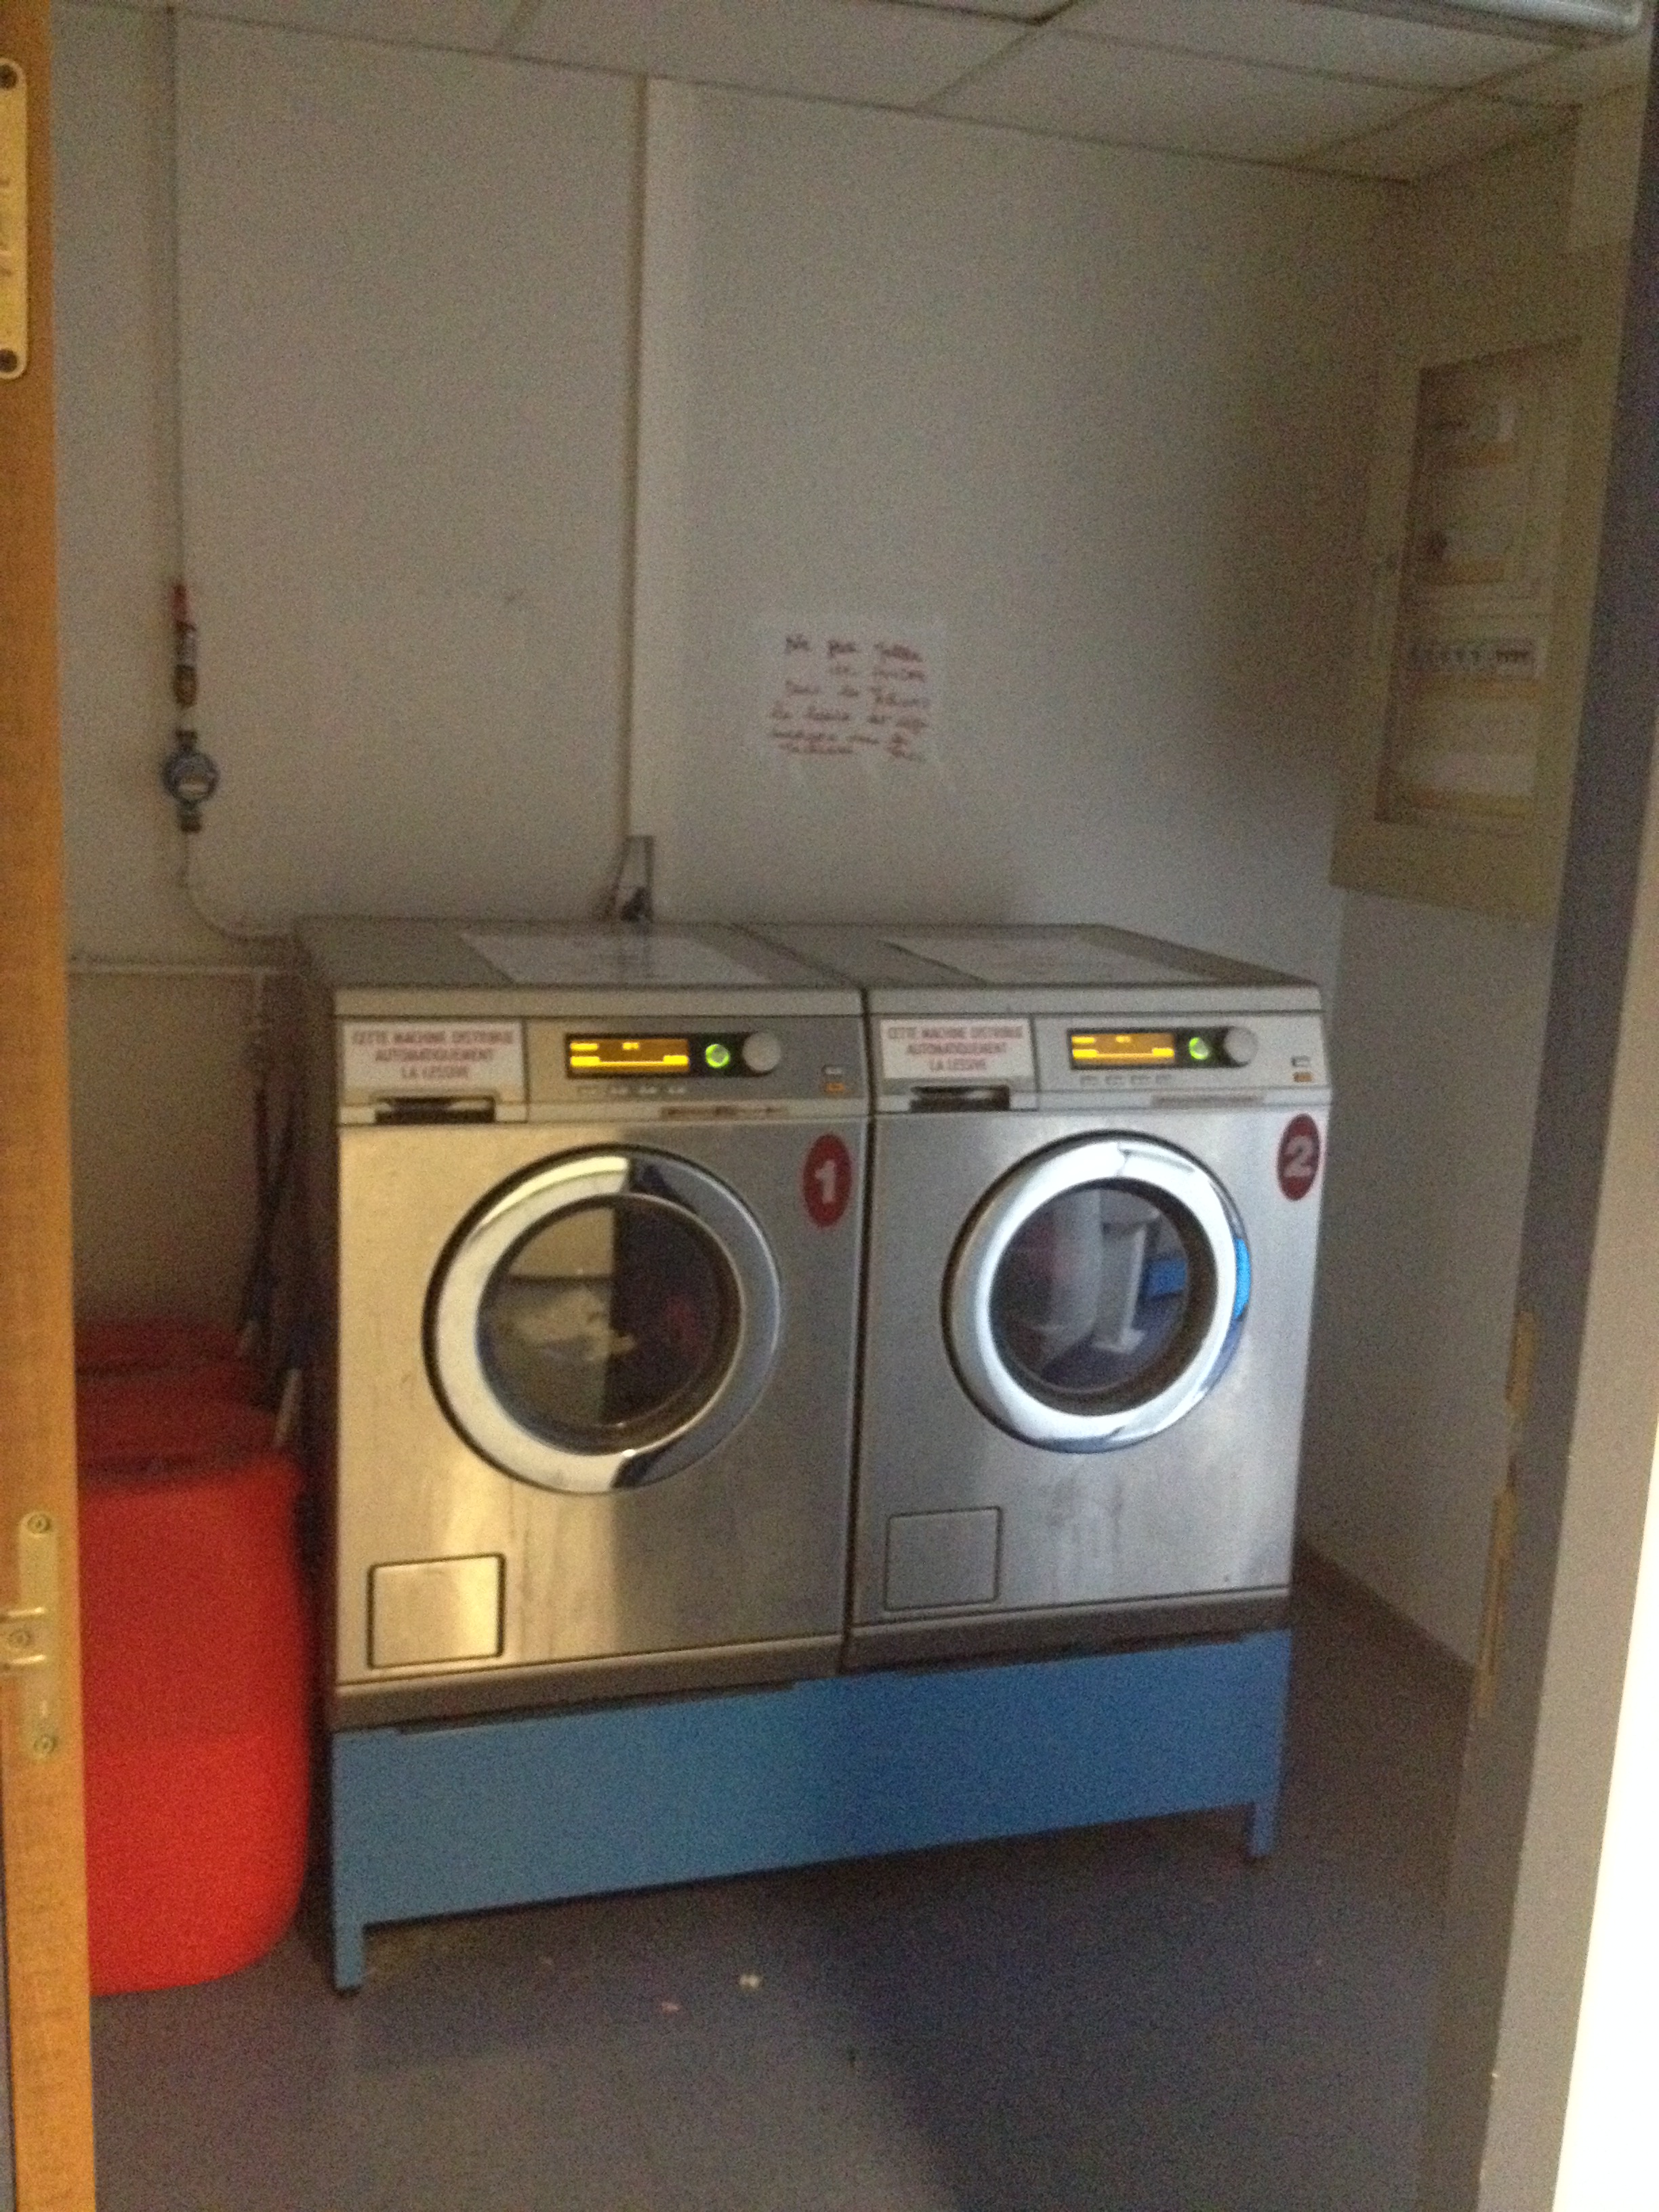 Residence Laundry Room